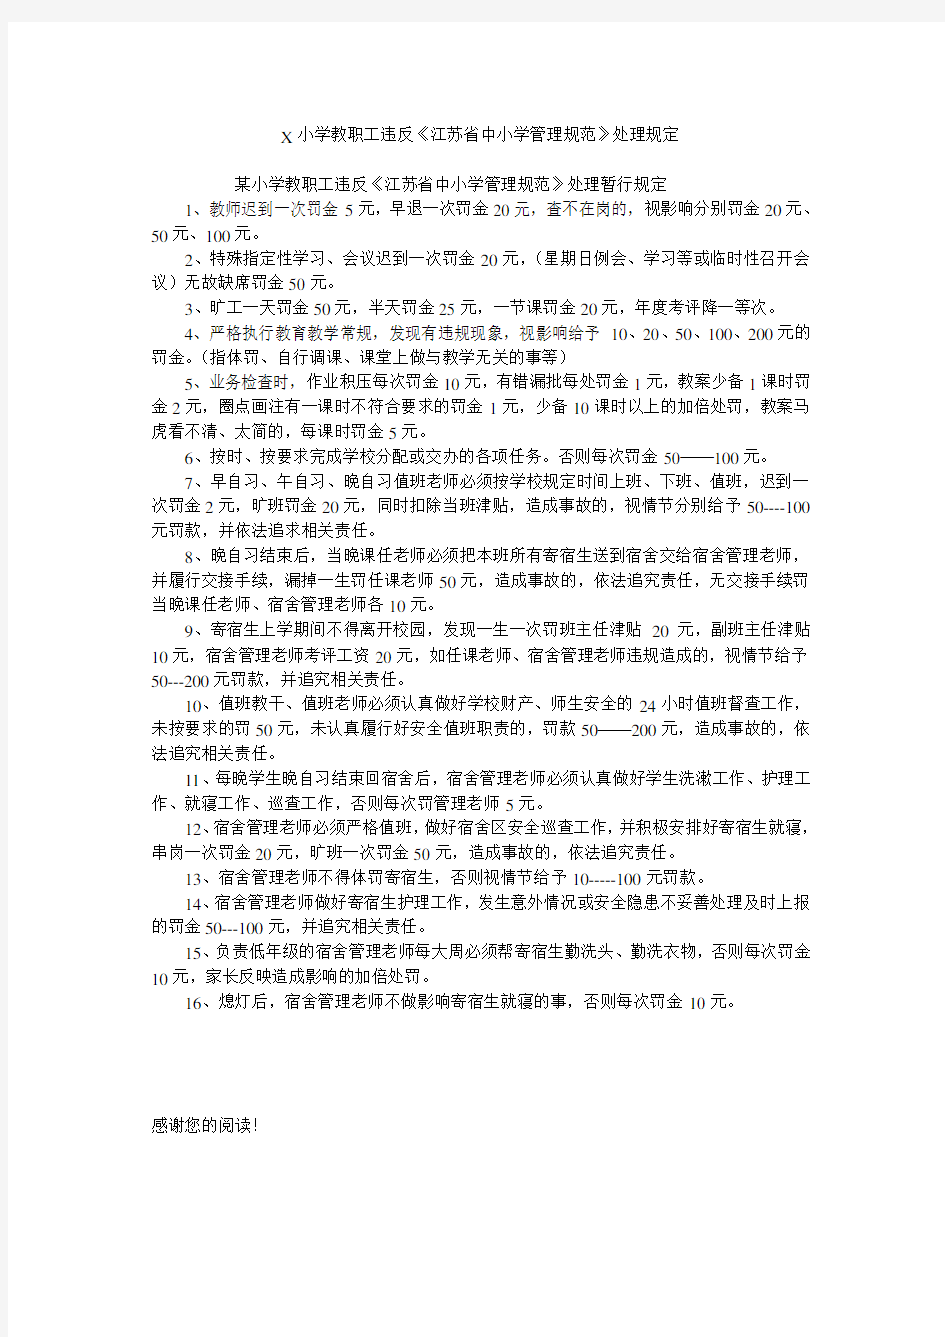 X小学教职工违反《江苏省中小学管理规范》处理规定